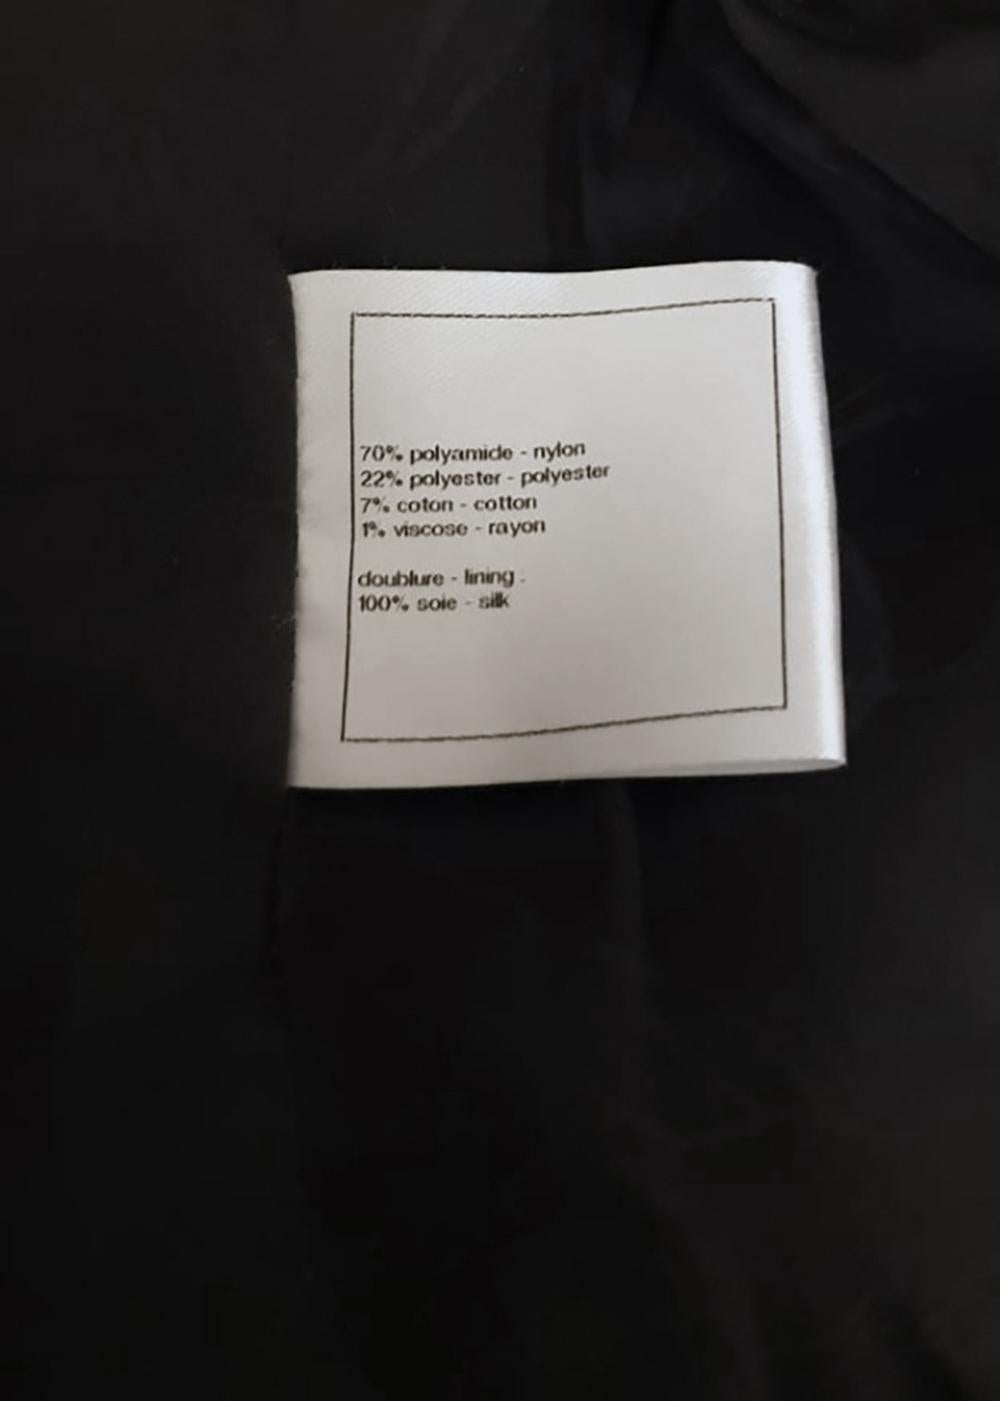 Chanel Supermodel Nata Vodianova Style Tweed Jacket 10